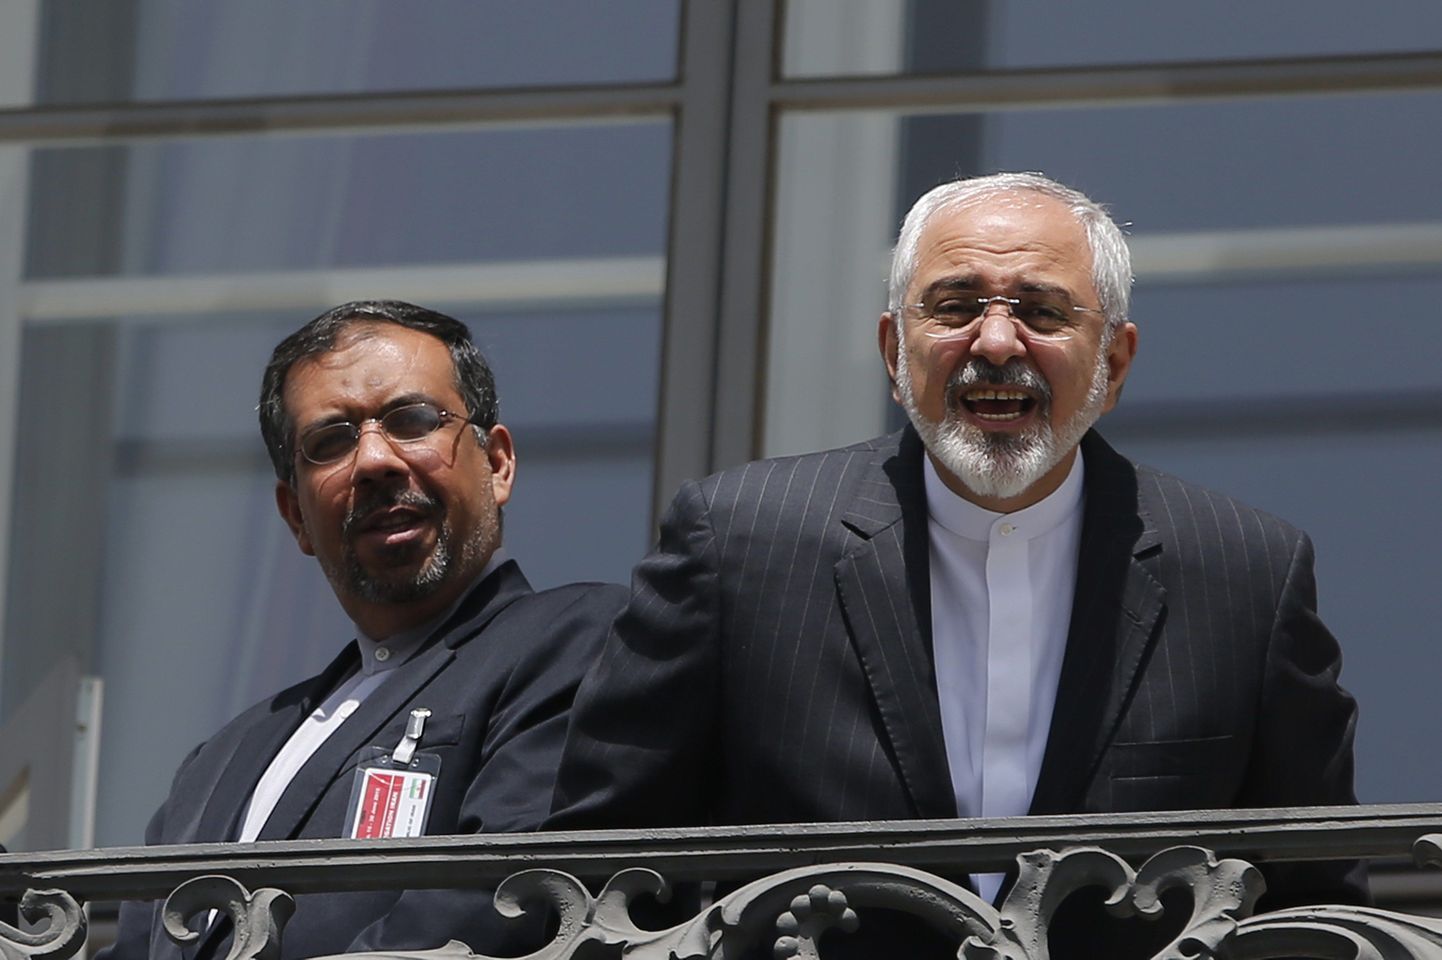 Iraani välisminister Mohammad Javad Zarif ajakirjanikega suhtlemas.